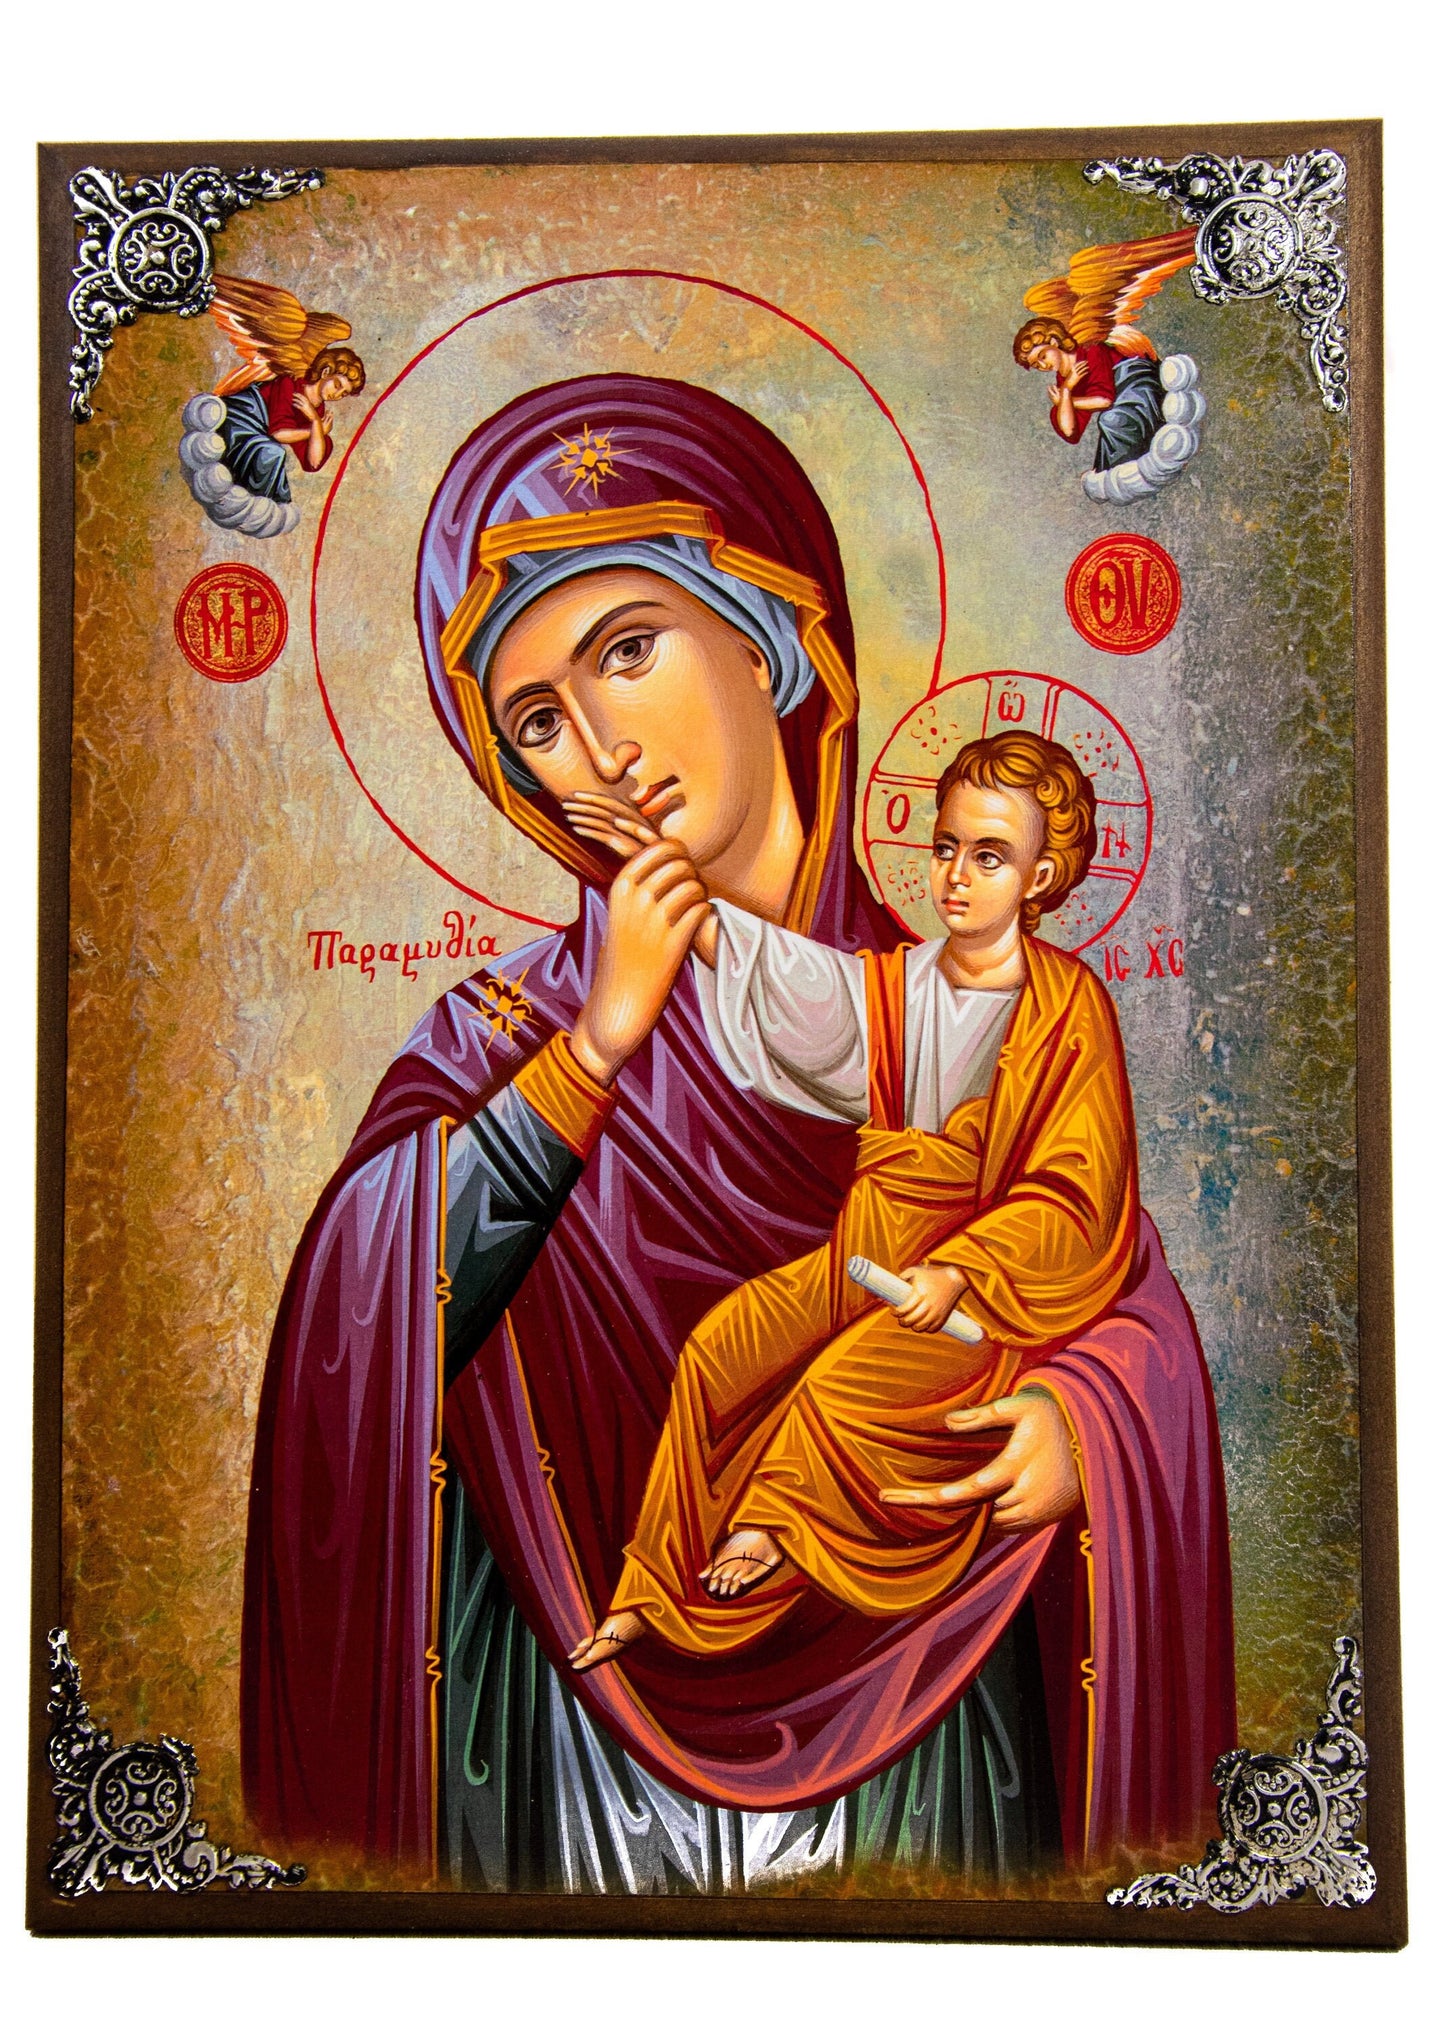 Virgin Mary icon Panagia, Handmade Greek Christian Orthodox Icon of Theotokos, Mother of God Byzantine art wall hanging wood plaque TheHolyArt